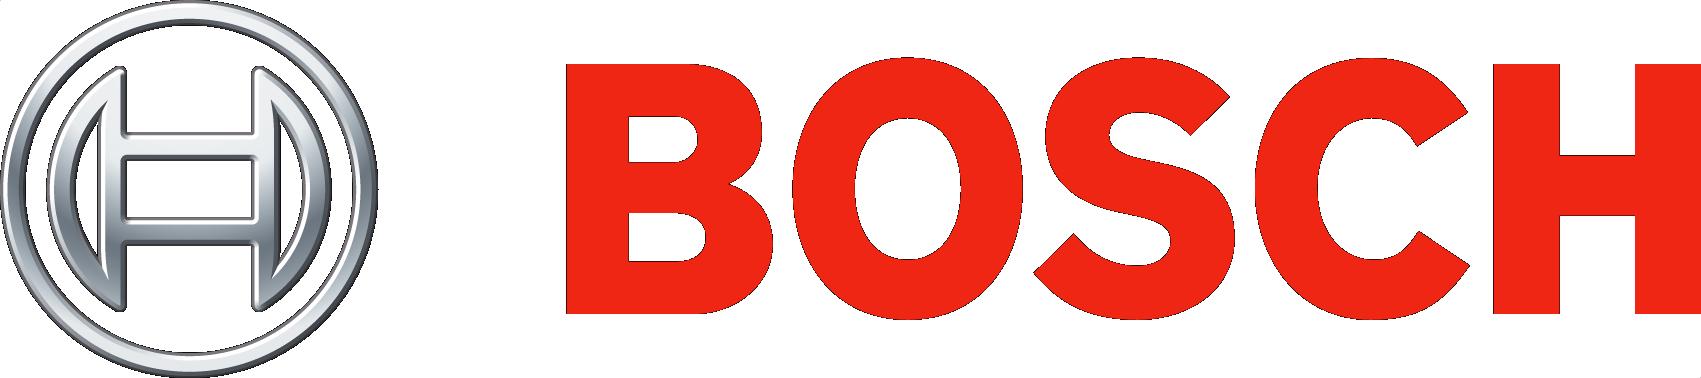 Логотип корпорации Robert Bosch